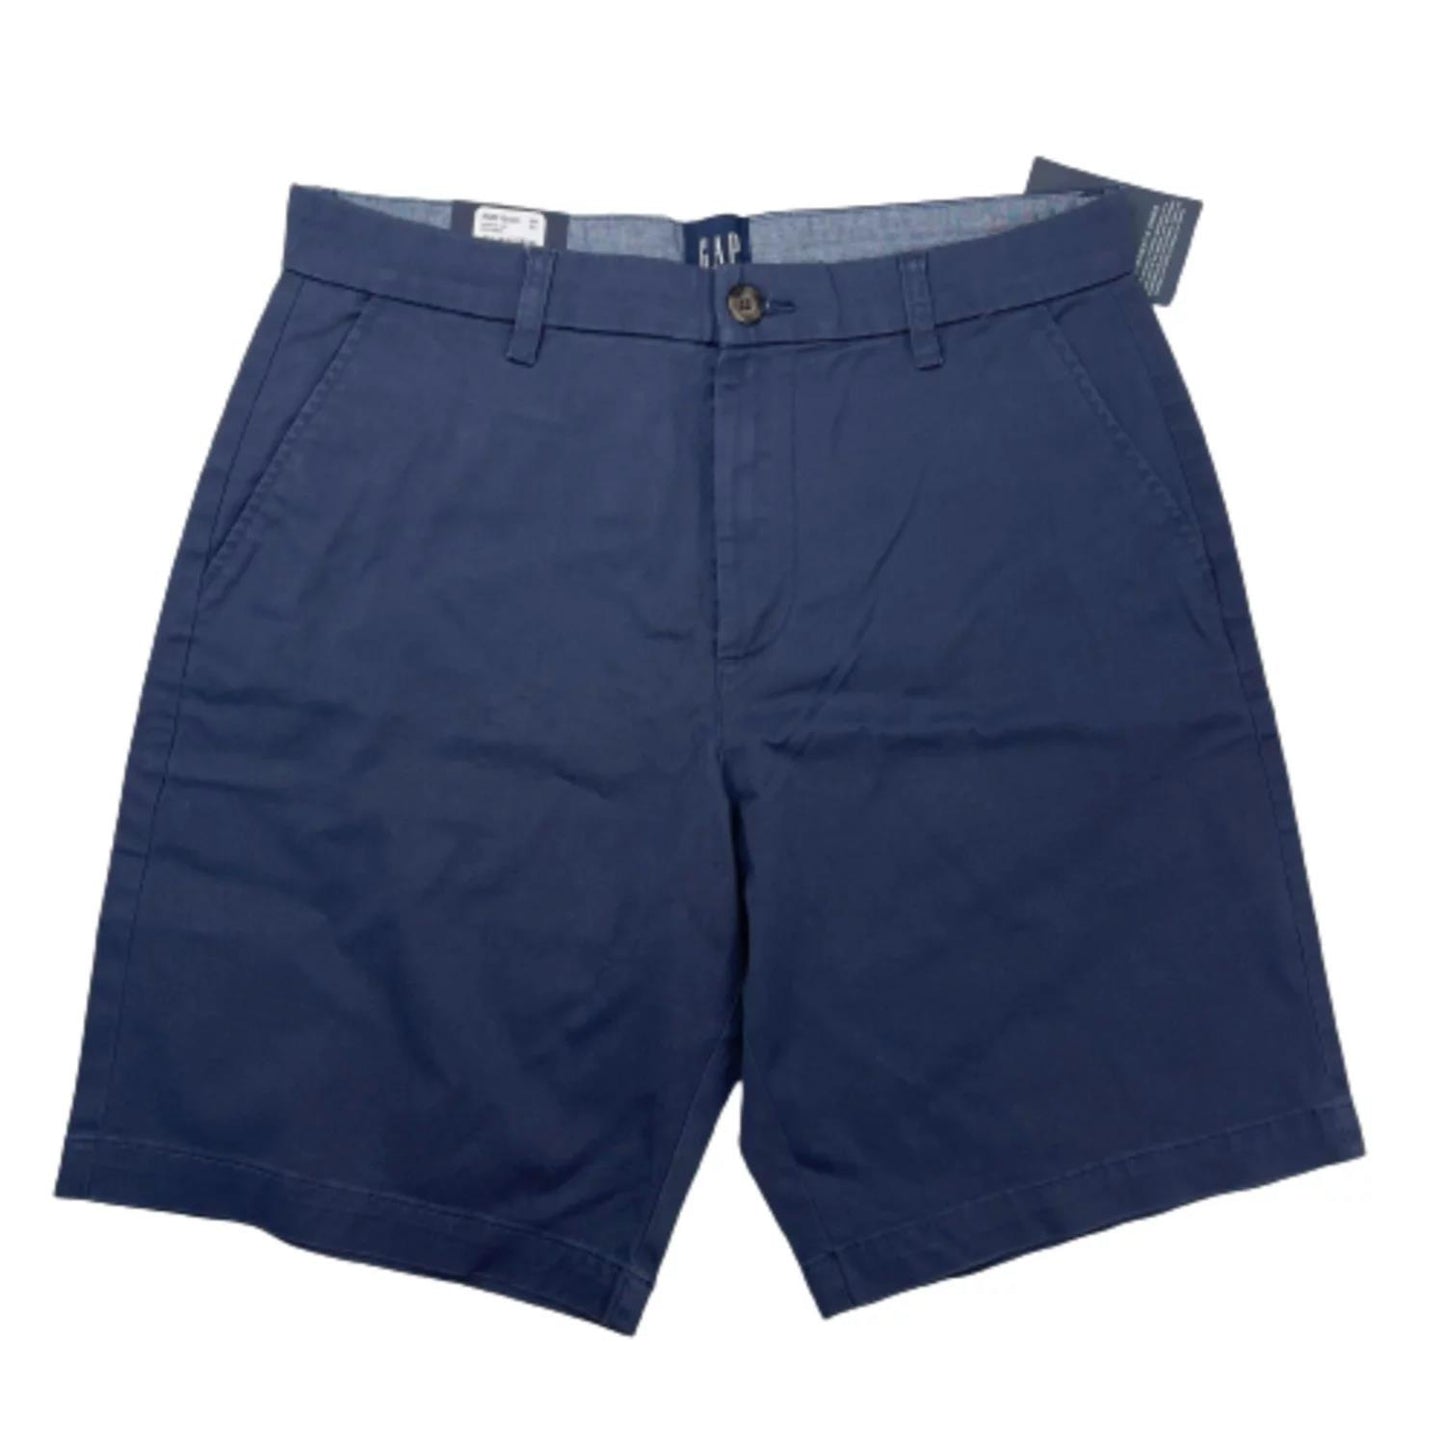 GAP Men's Easy Fit Vintage Flat Front Shorts